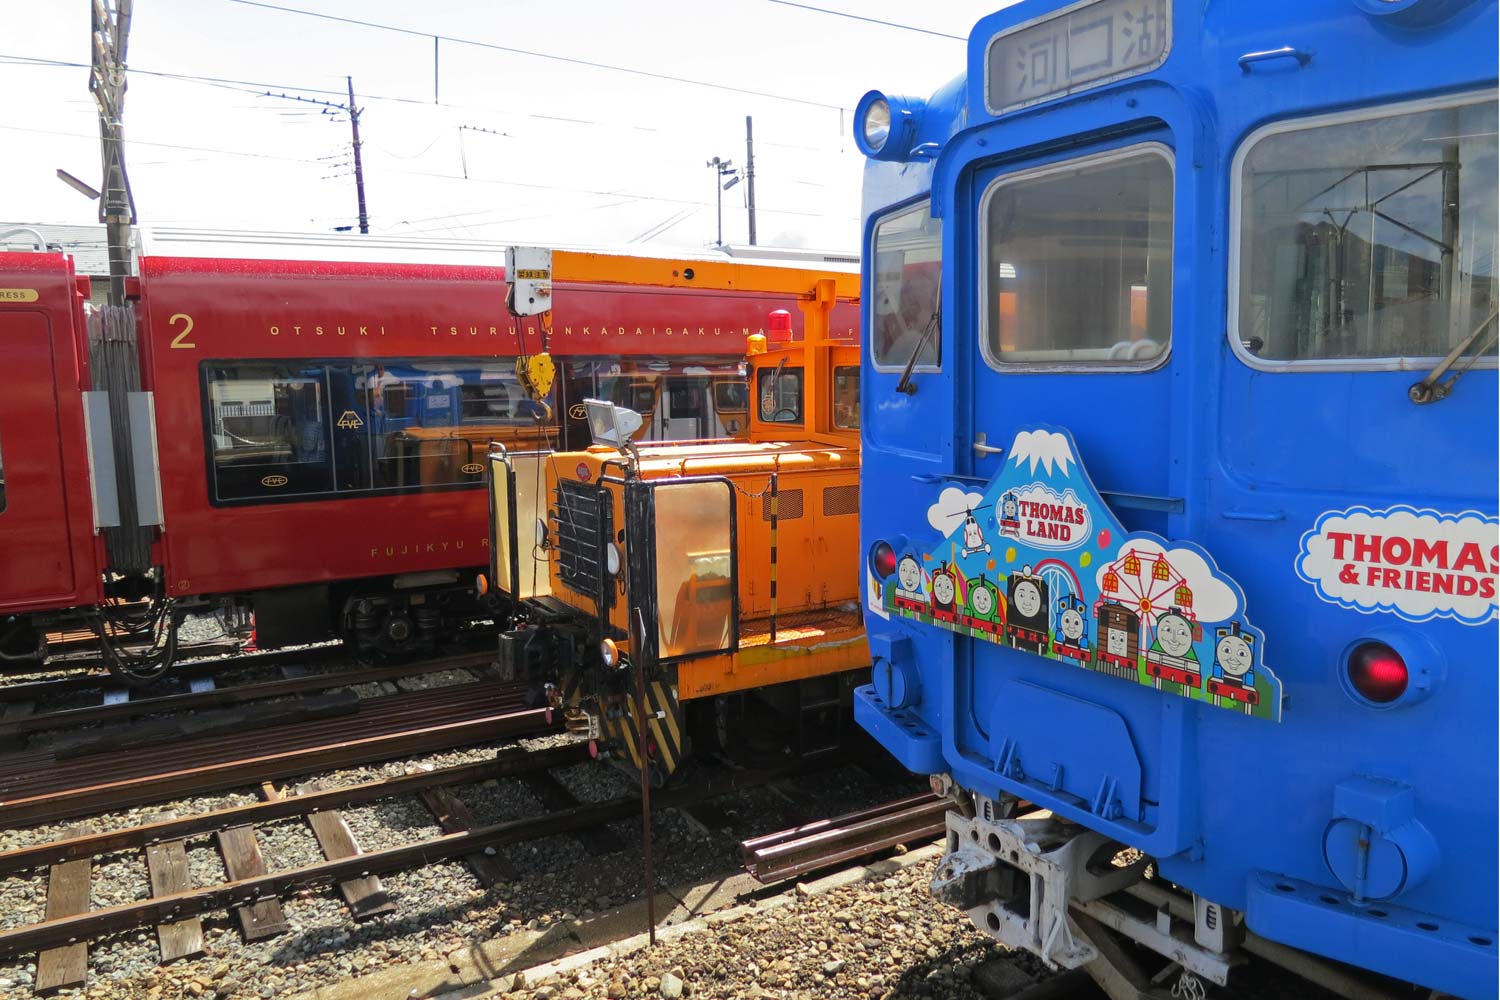 kawaguchiko-2016-train-thomas-land